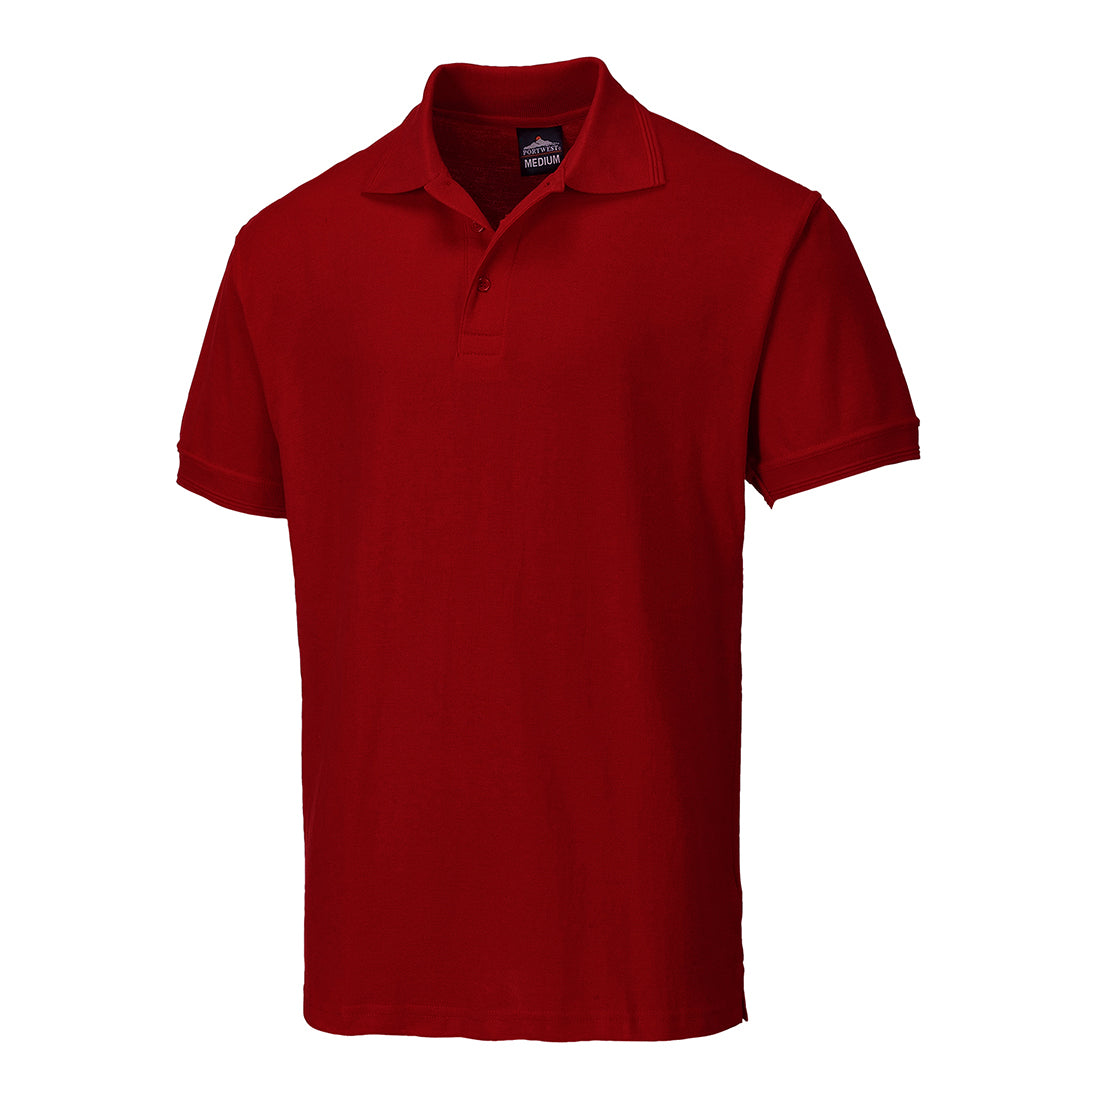 Portwest B210 - Maroon Sz M Naples Polo Shirt Workwear Corporate Wear